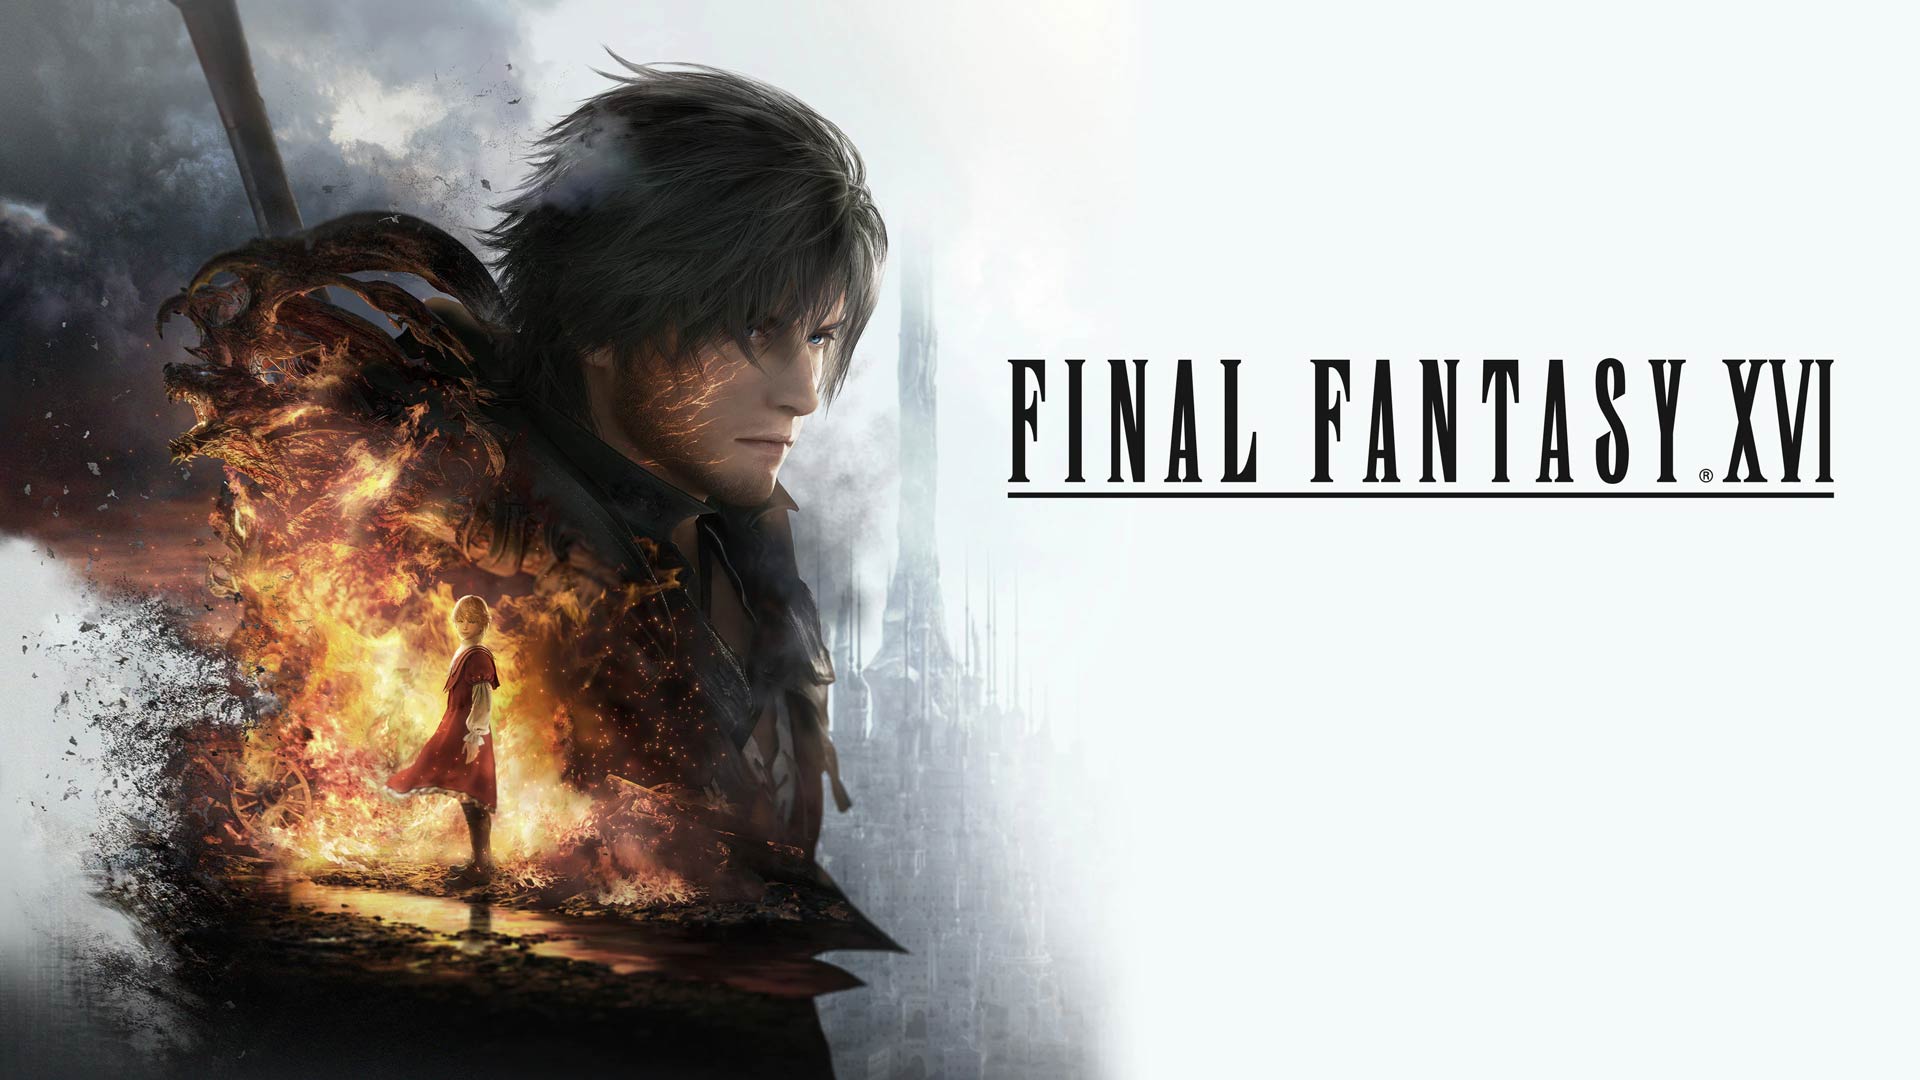 Final Fantasy XVI trailer showcases 'power of PS5'